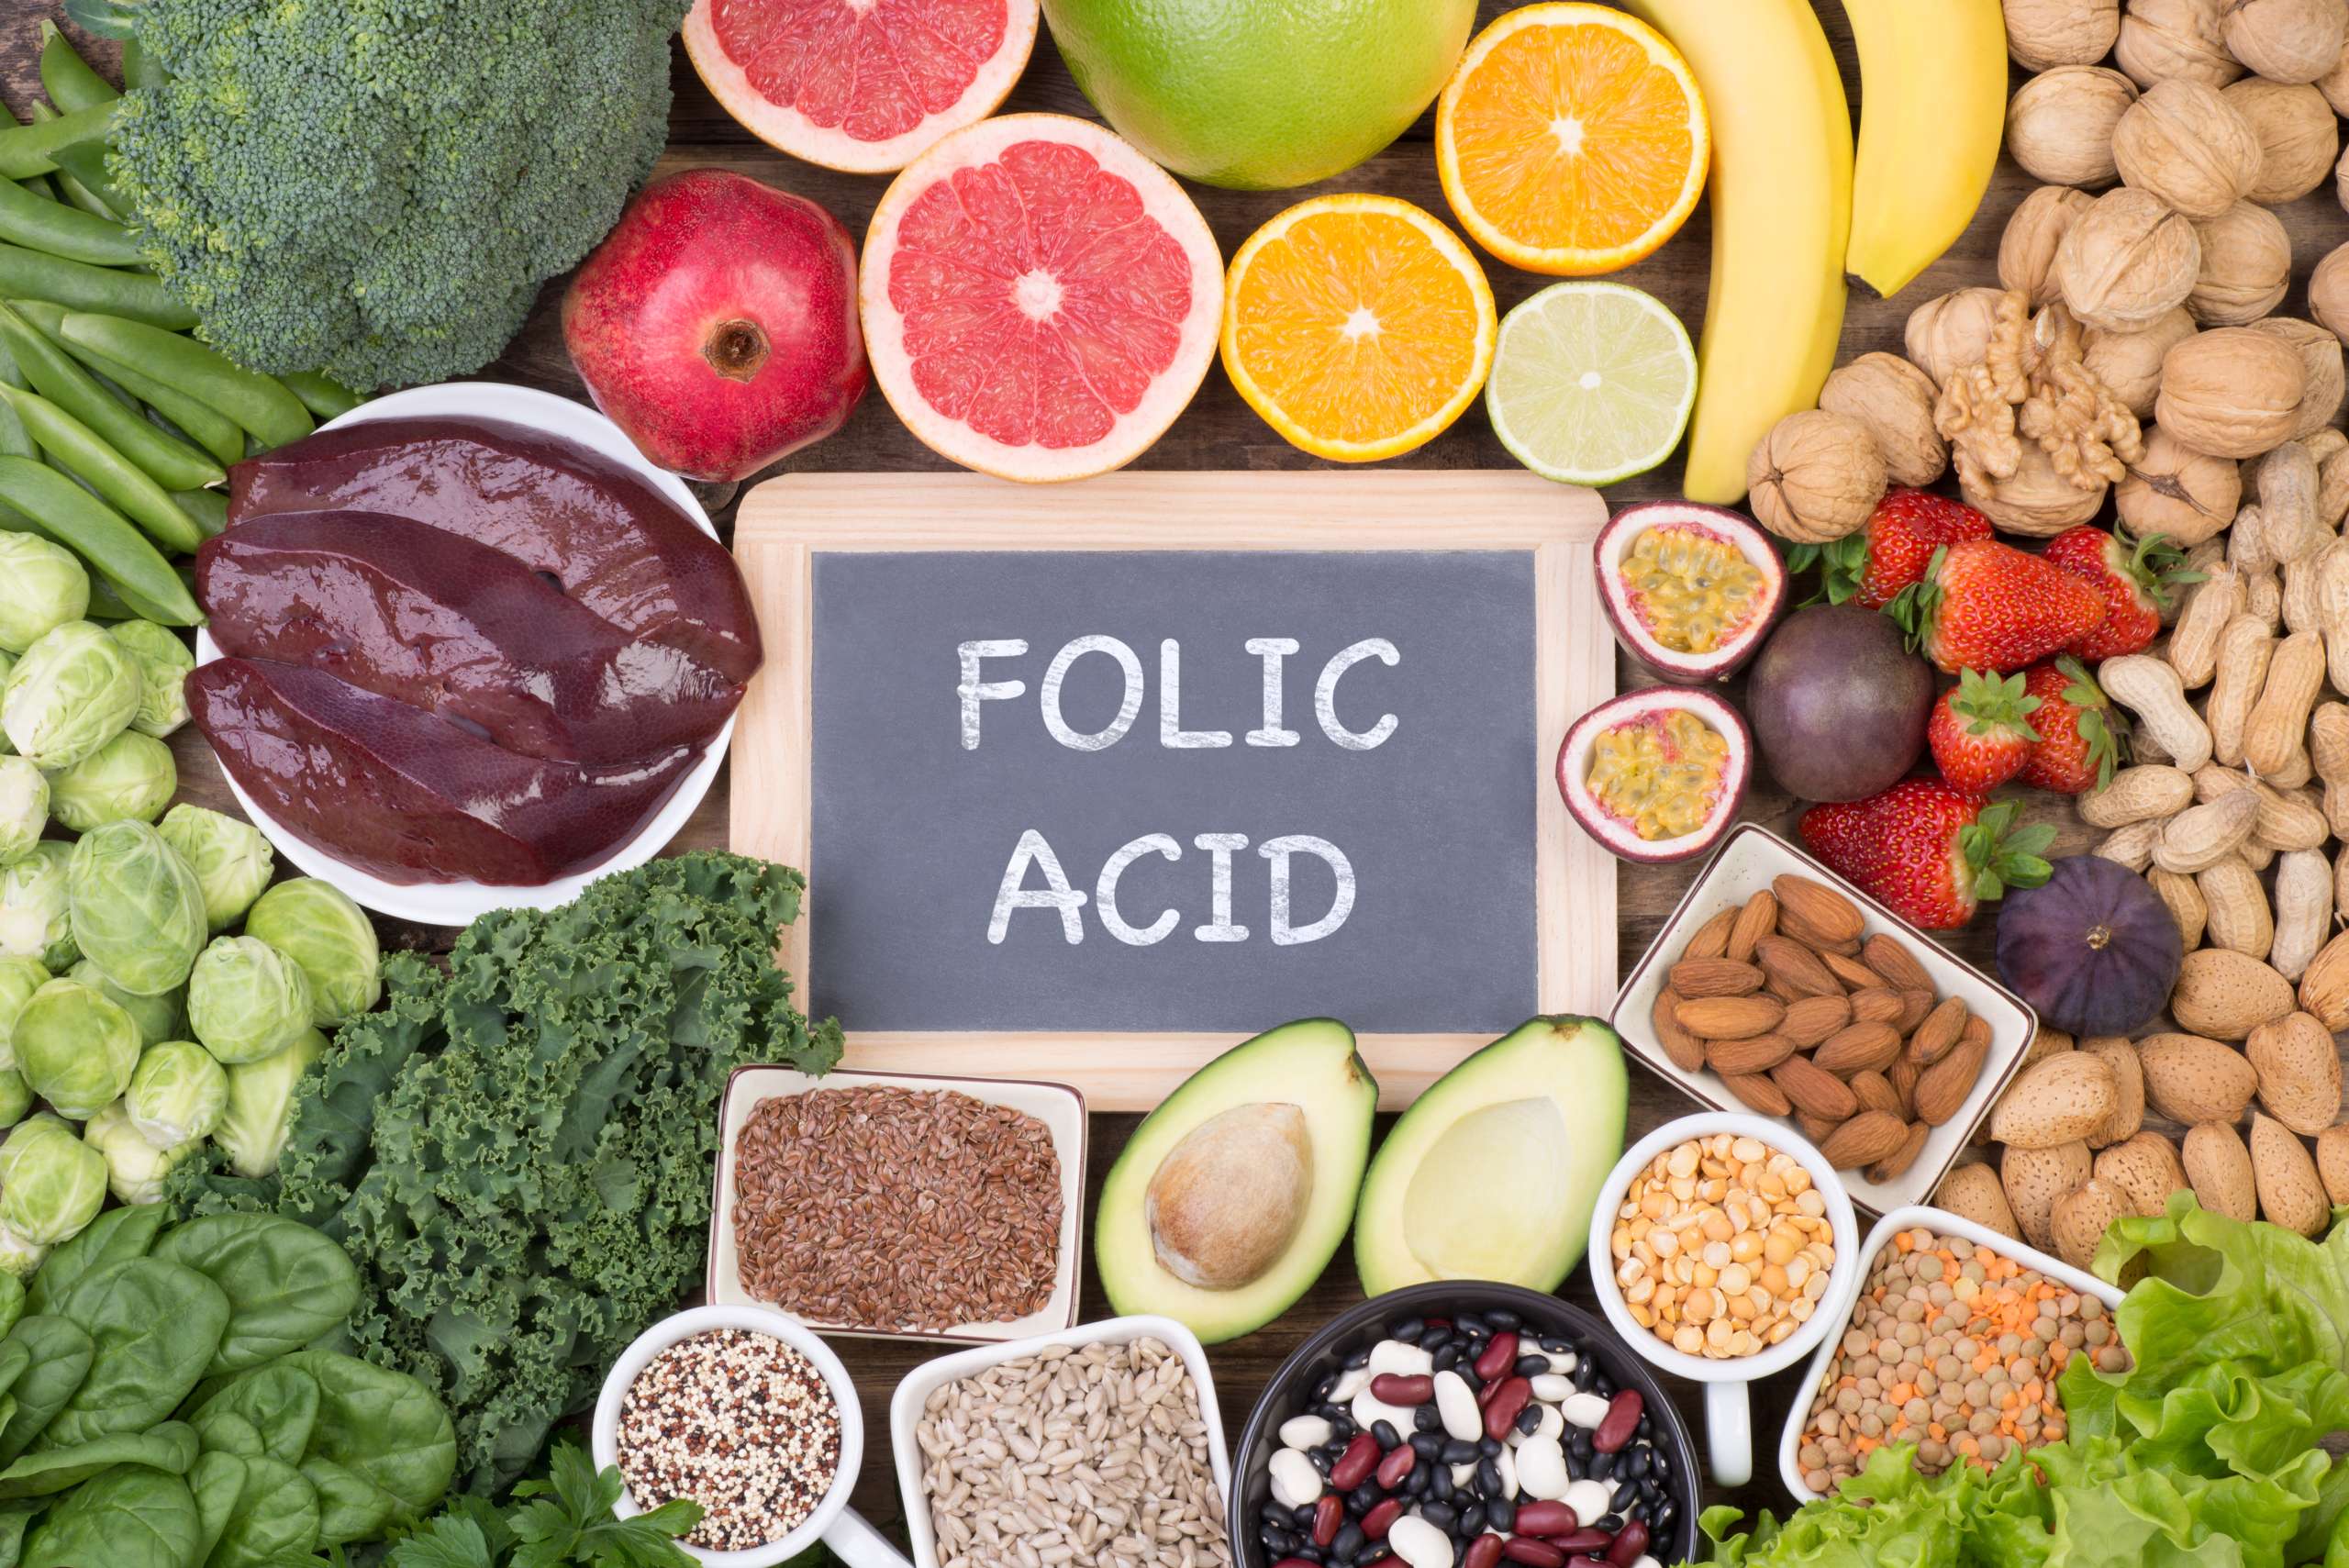 Food rich in folic acid- Preeclampsia Risk Before Pregnancy